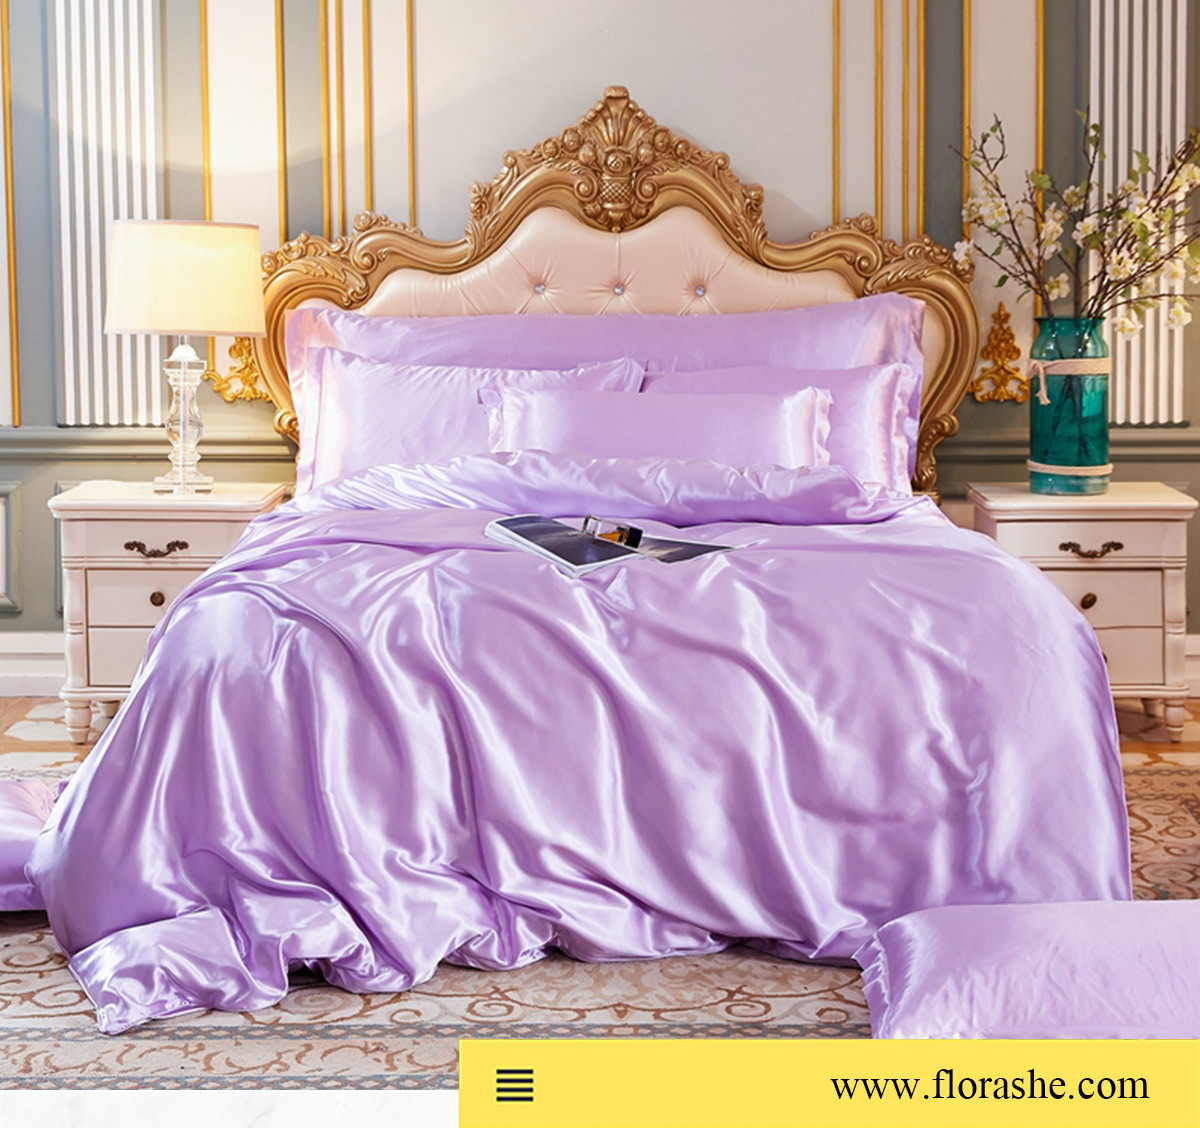 Home-Textile-Simple-Satin-Bedding-Set-Quilt-Cover-Pillowcases22.jpg